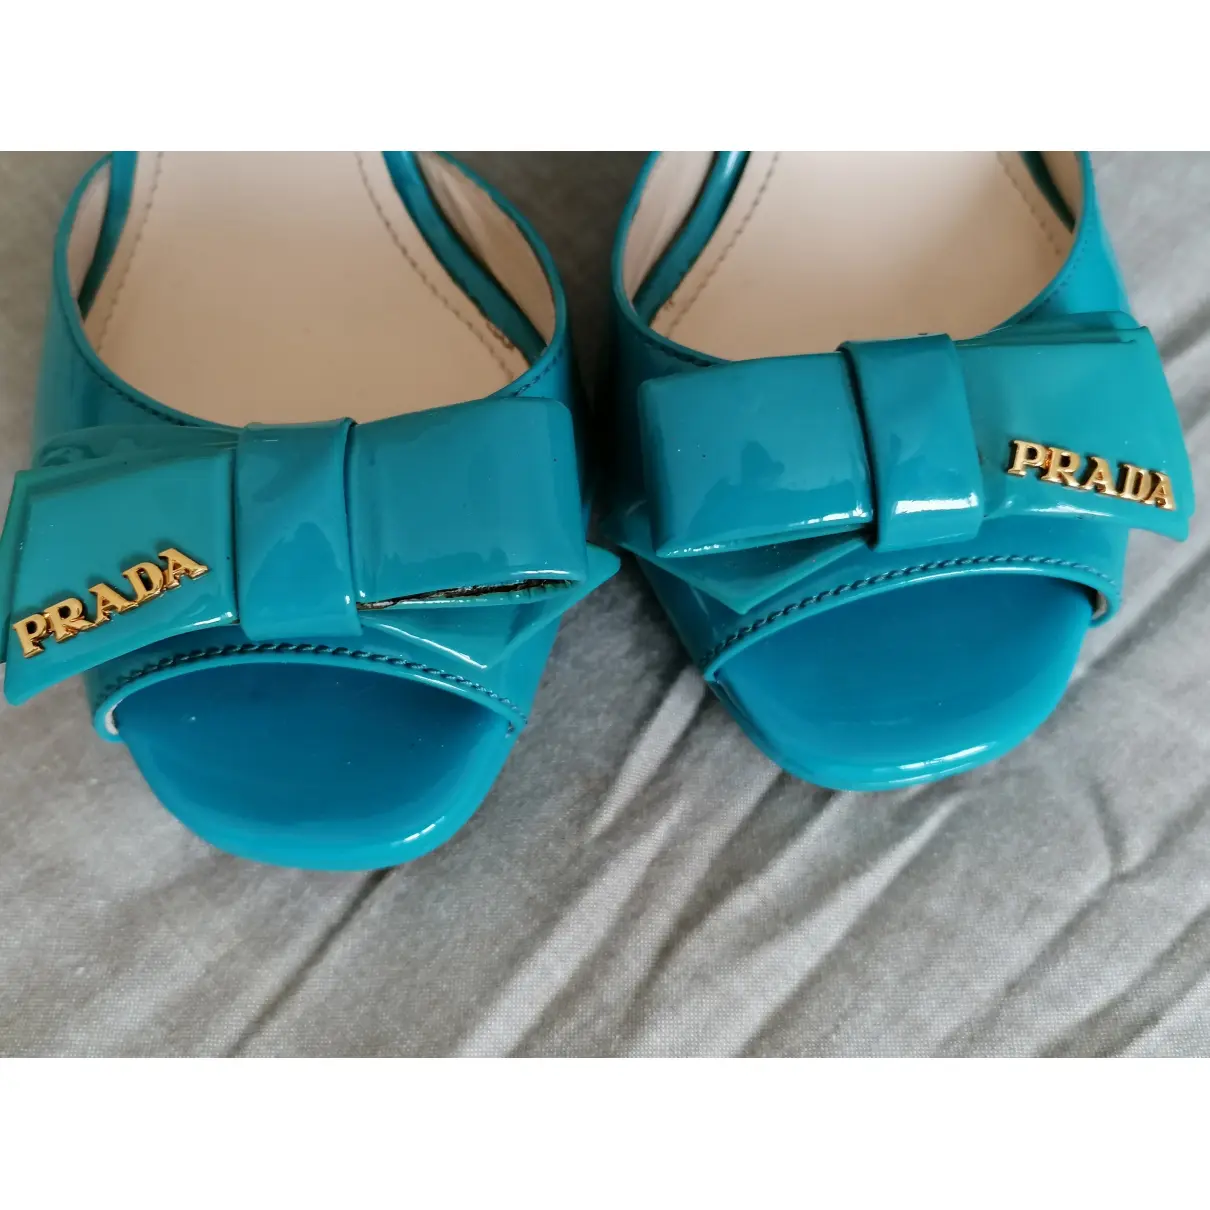 Buy Prada Patent leather sandals online